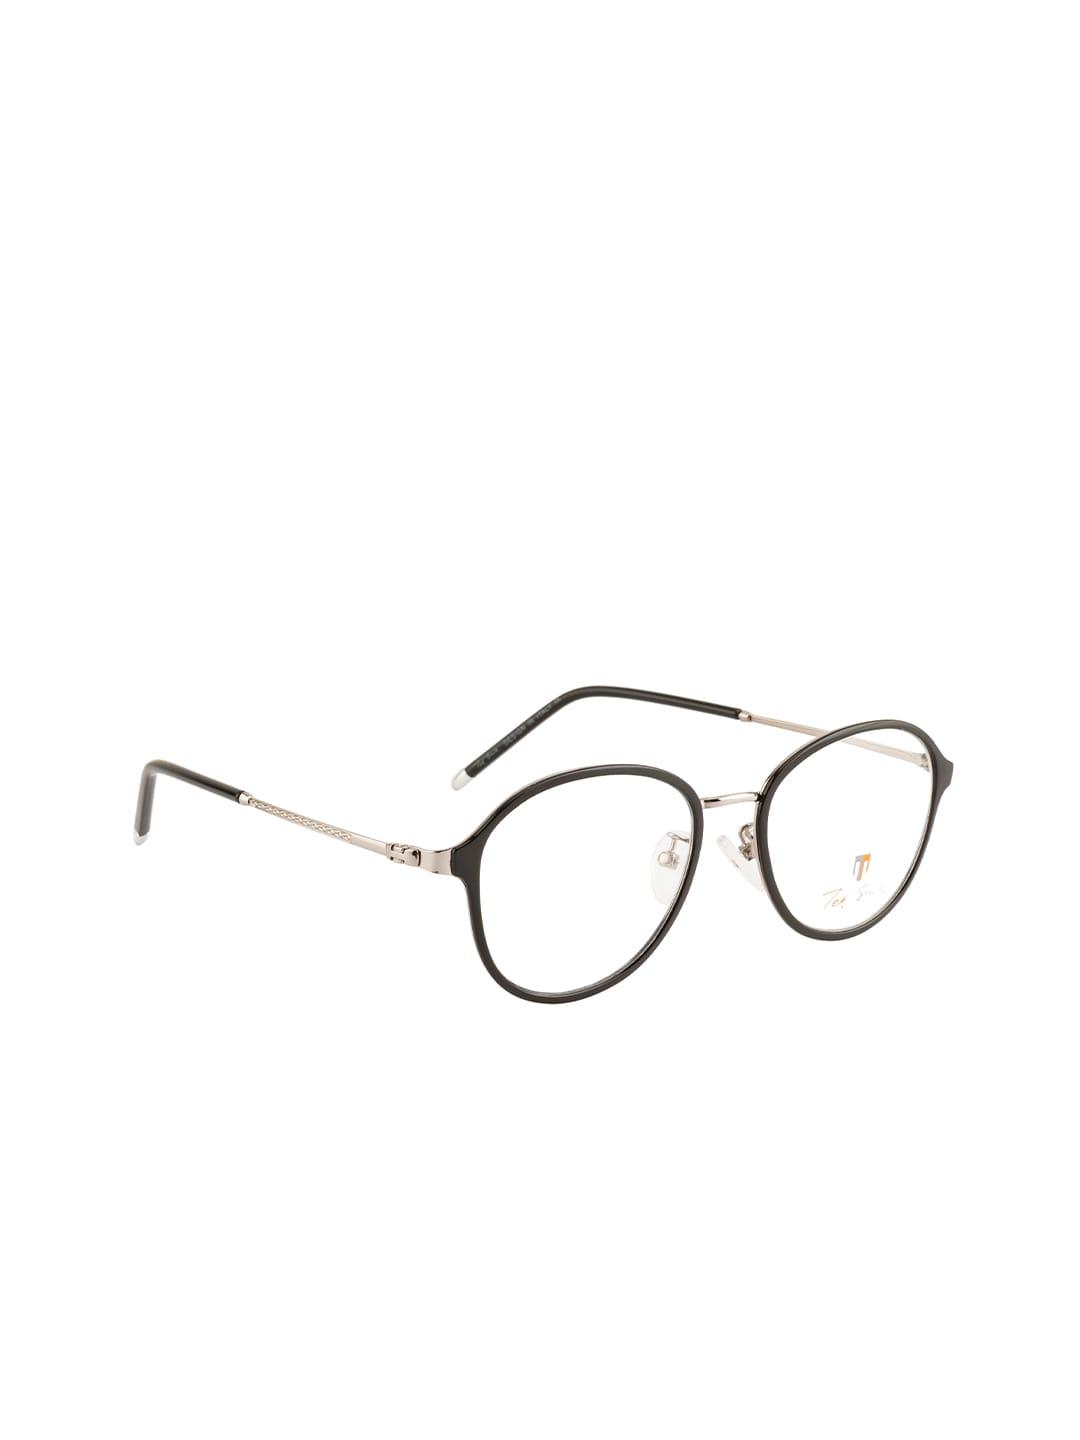 ted smith unisex silver-toned & black full rim round frames eyeglasses